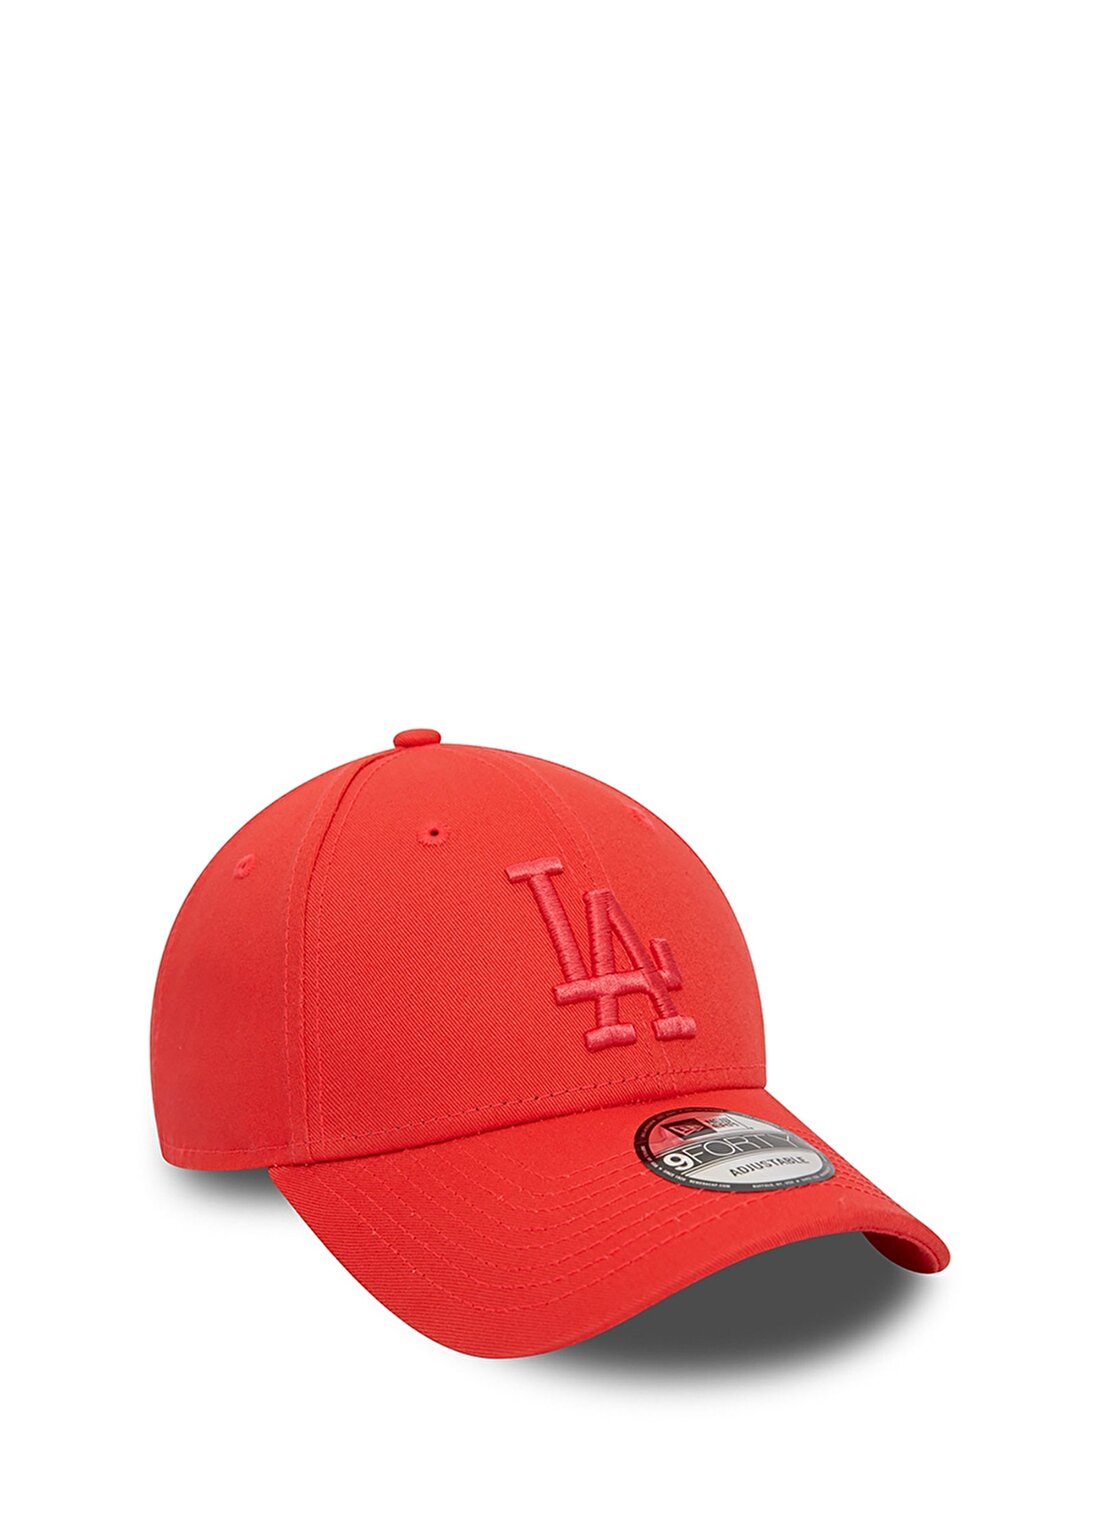 New Era Kırmızı Unisex Şapka 60435208 LEAGUE ESSENTIAL 9FORTY LO